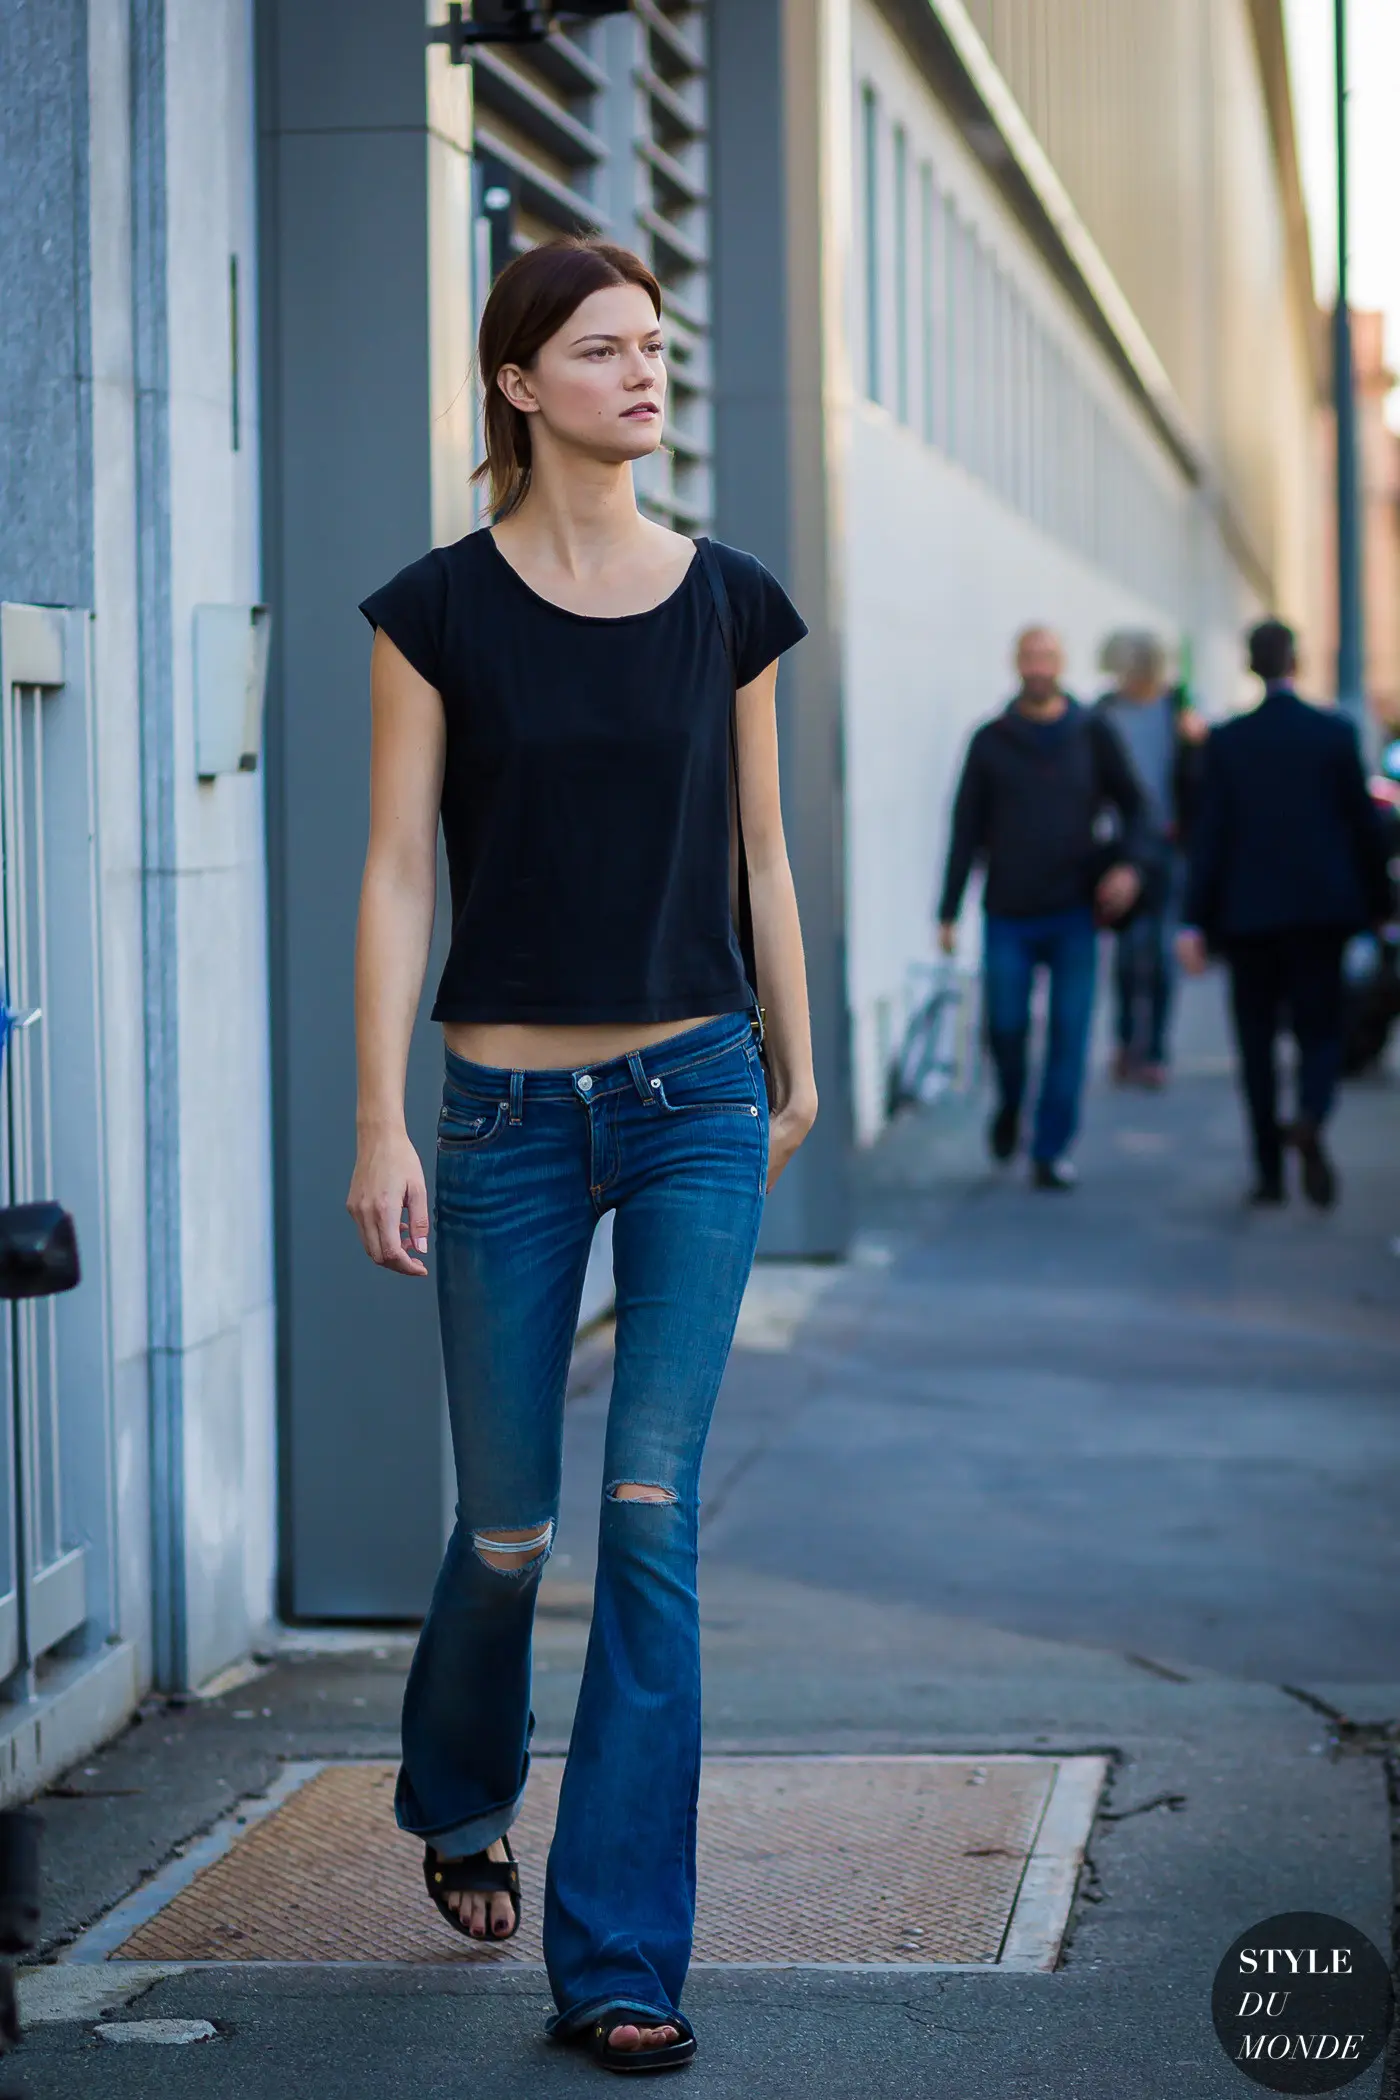 Cewek kurus harus tepat memilih celana jeans. (Image: styledumonde.com)